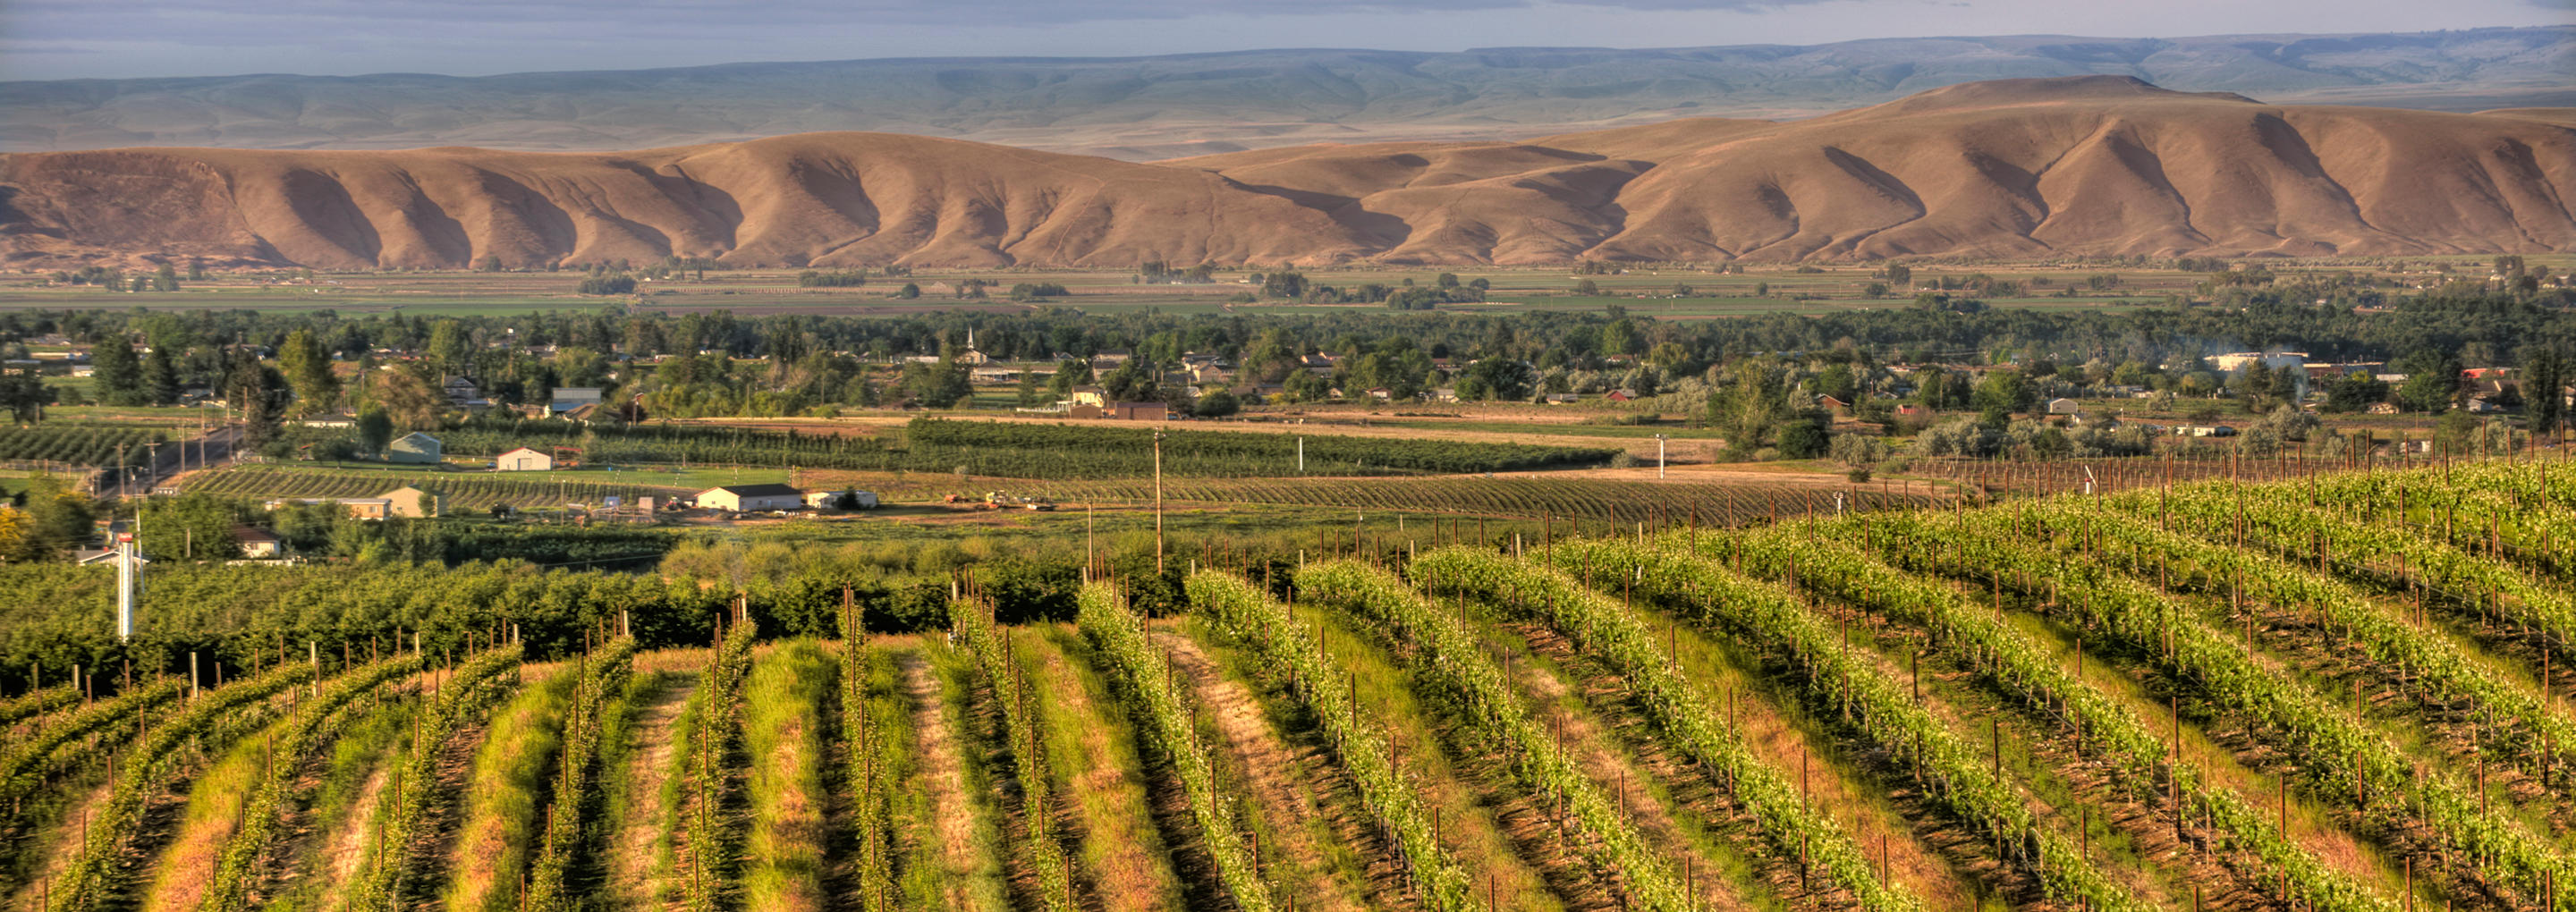 Vineyards in Yakima Valley Washington